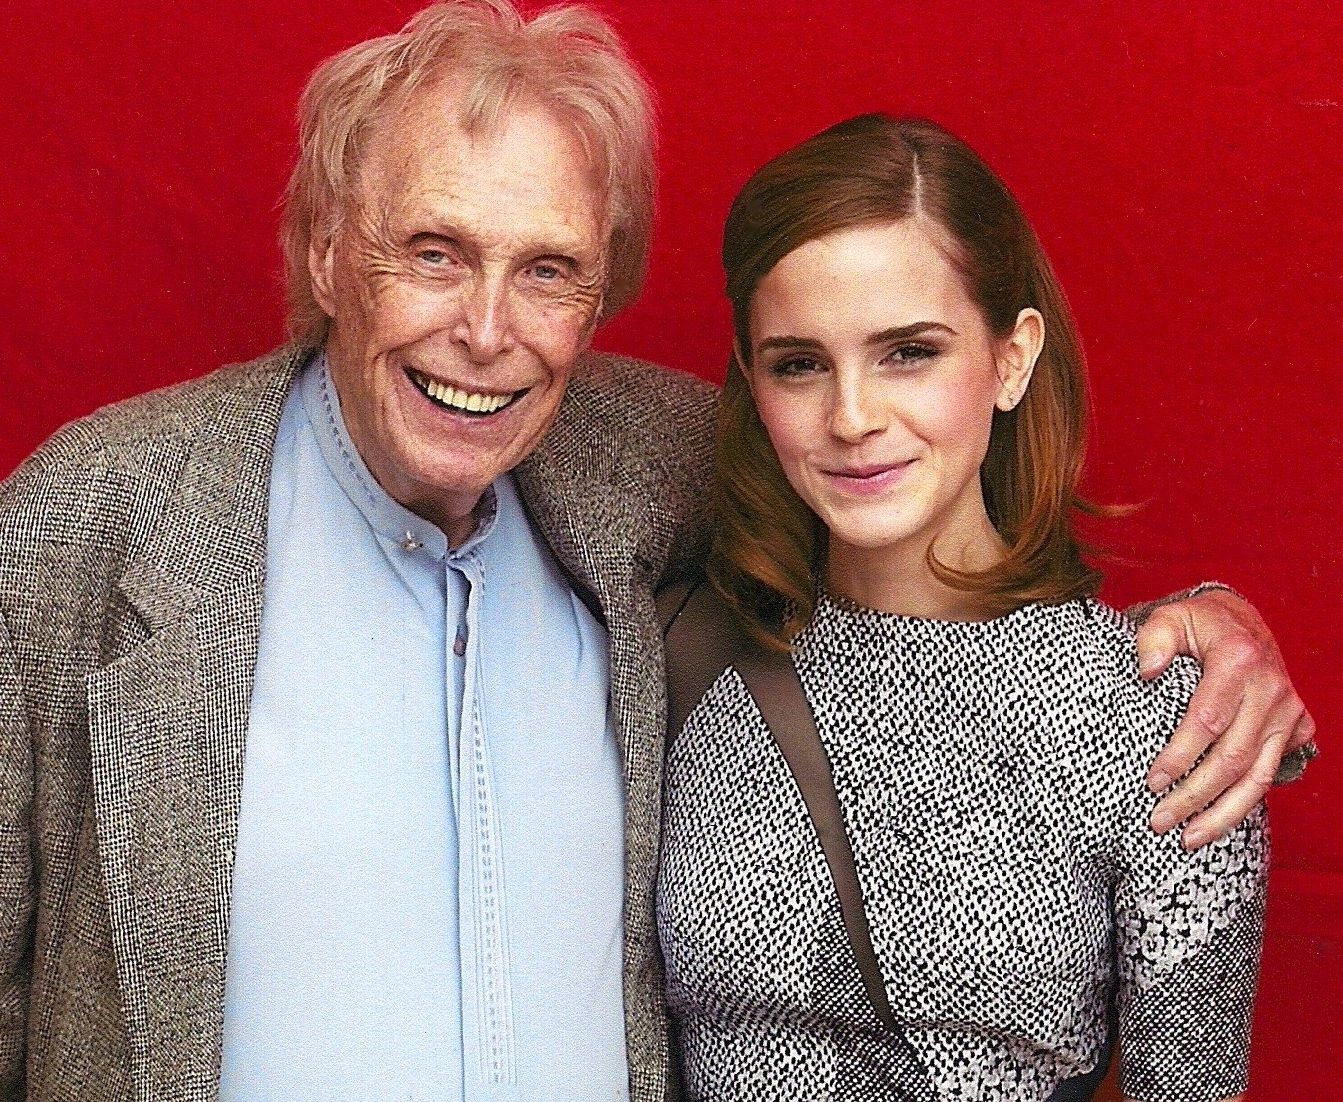 With Emma Watson